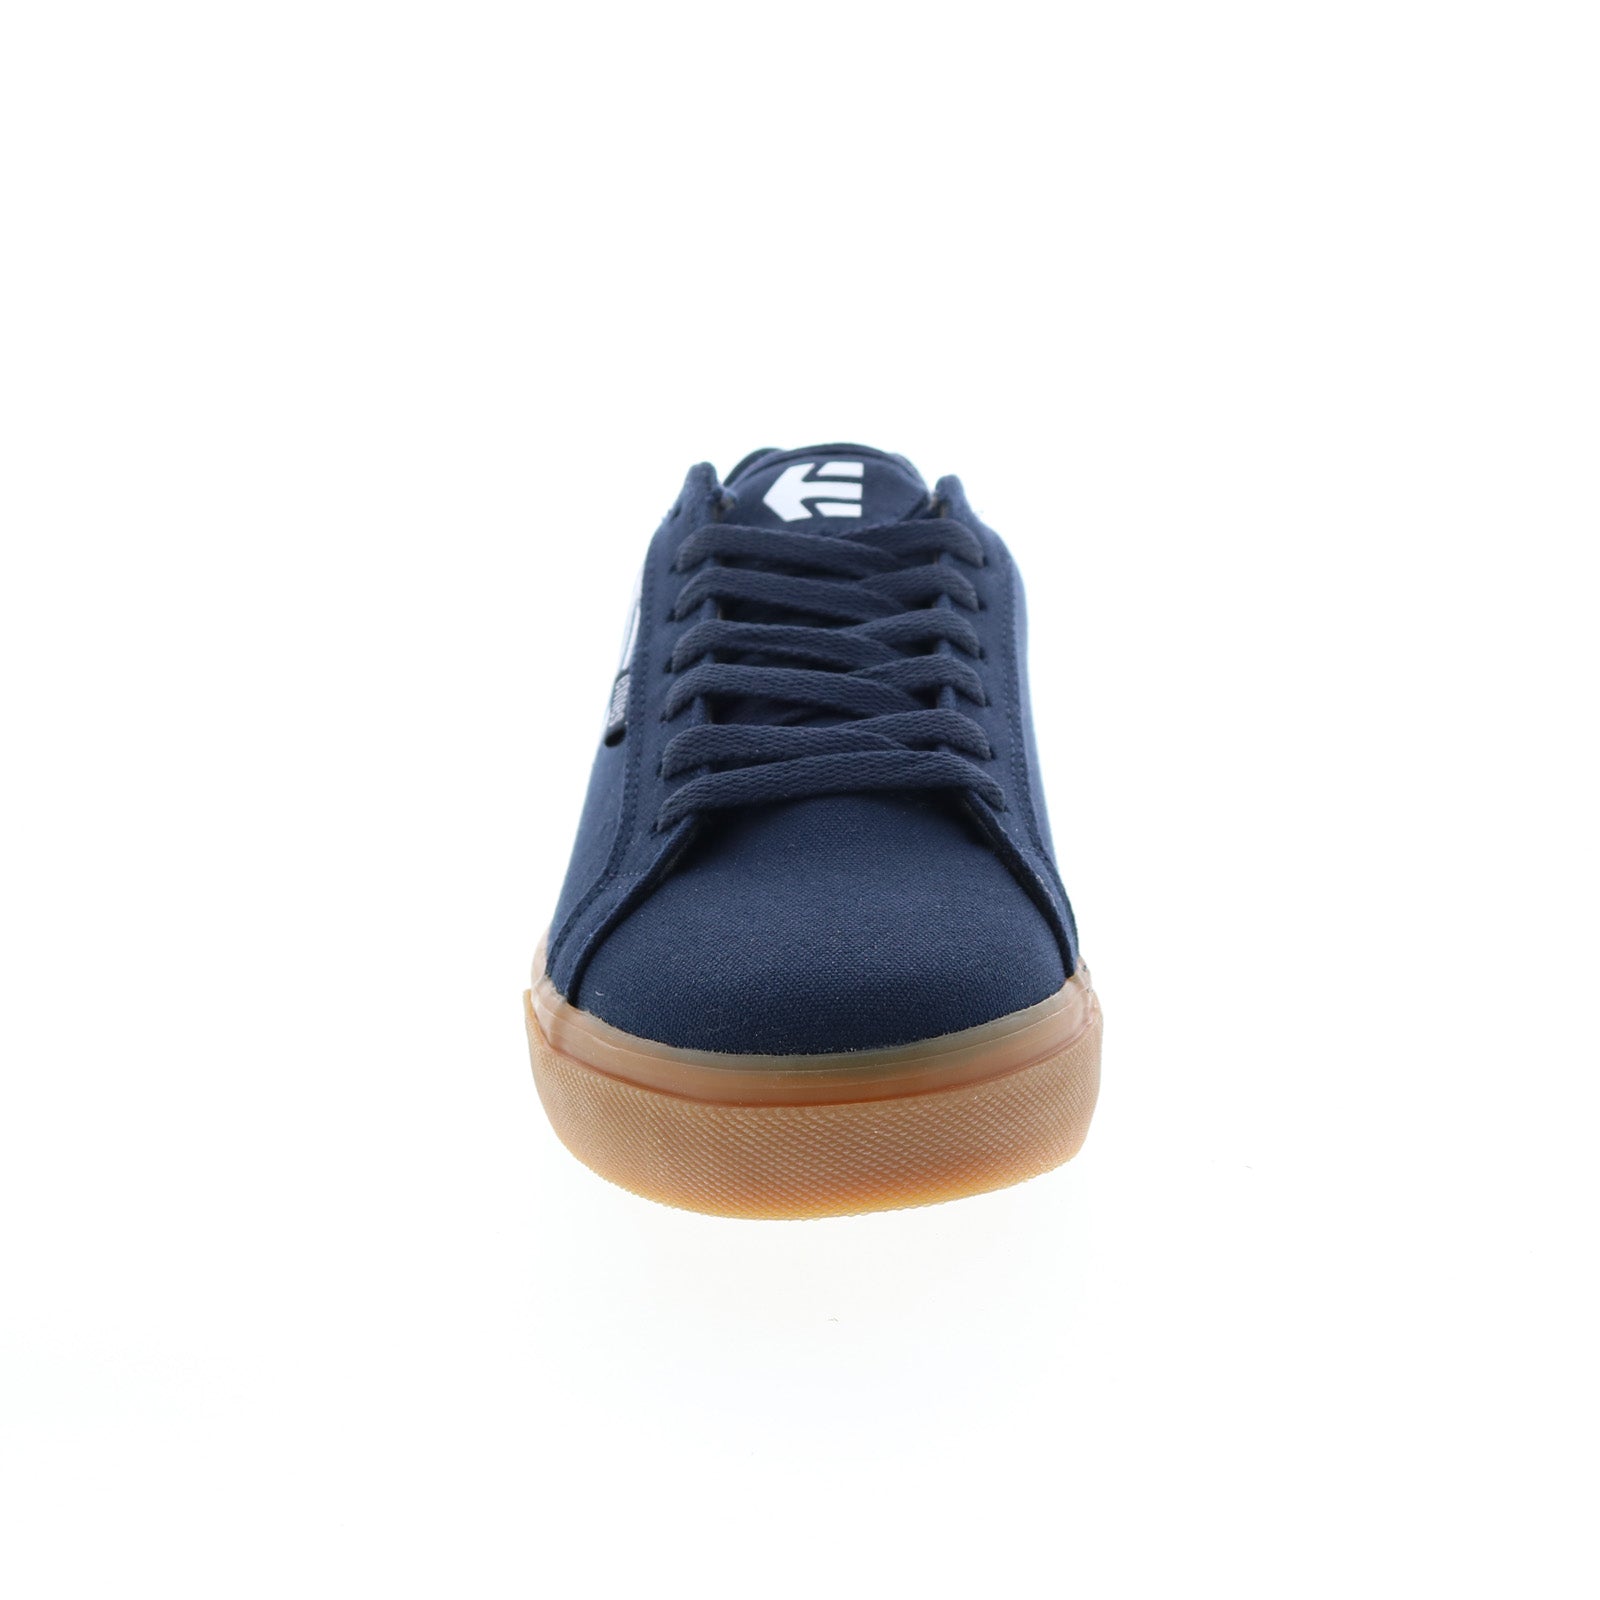 etnies Women's Fader Skate Shoe,Brown/Blue/Gum,8.5 M US: Buy